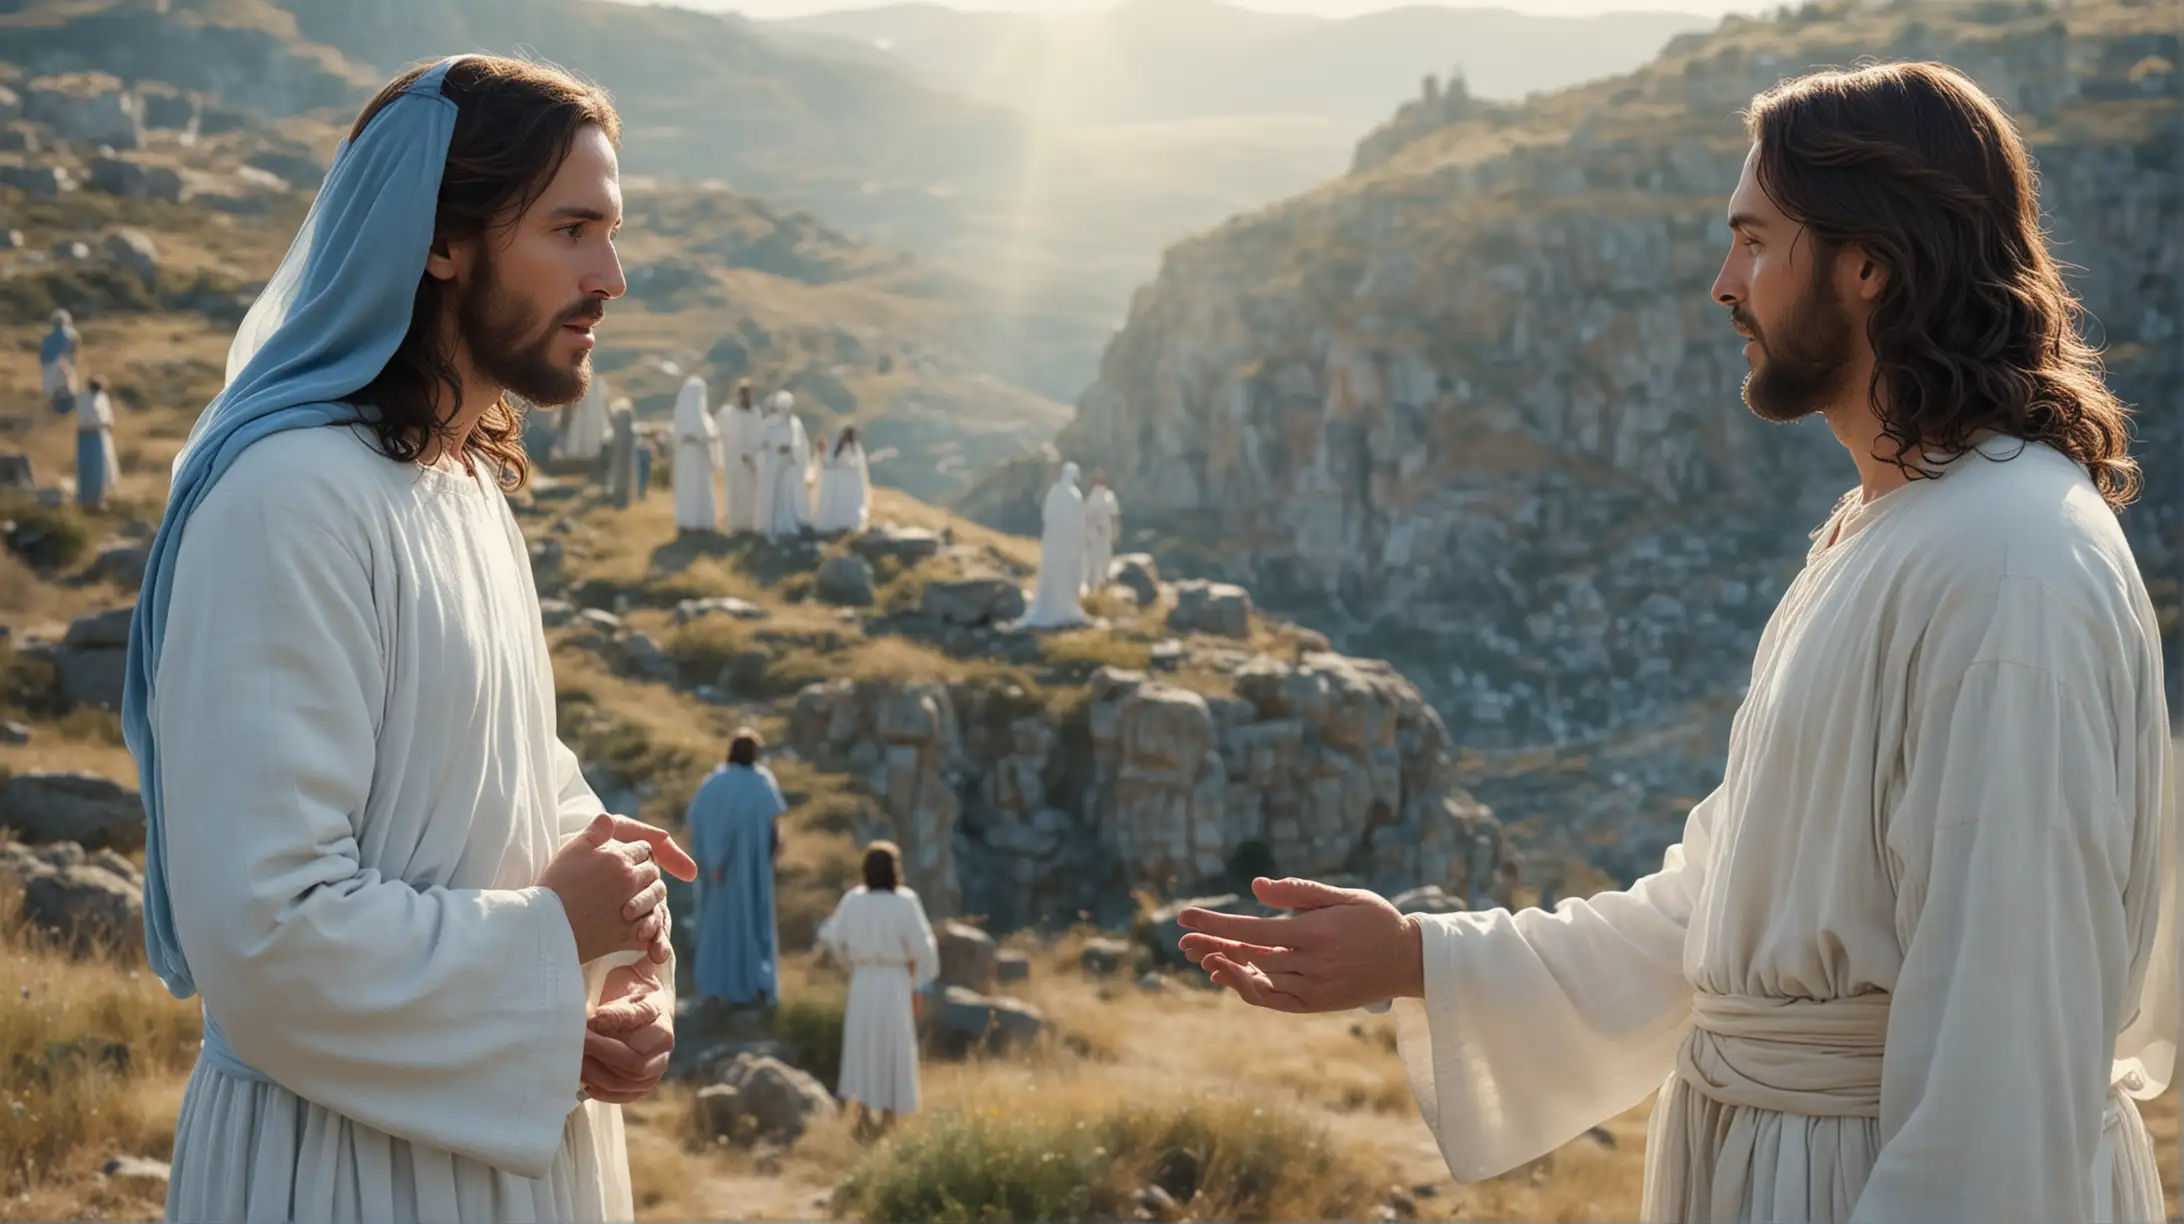 Jesus in White Lovingly Observing Peter in Blue